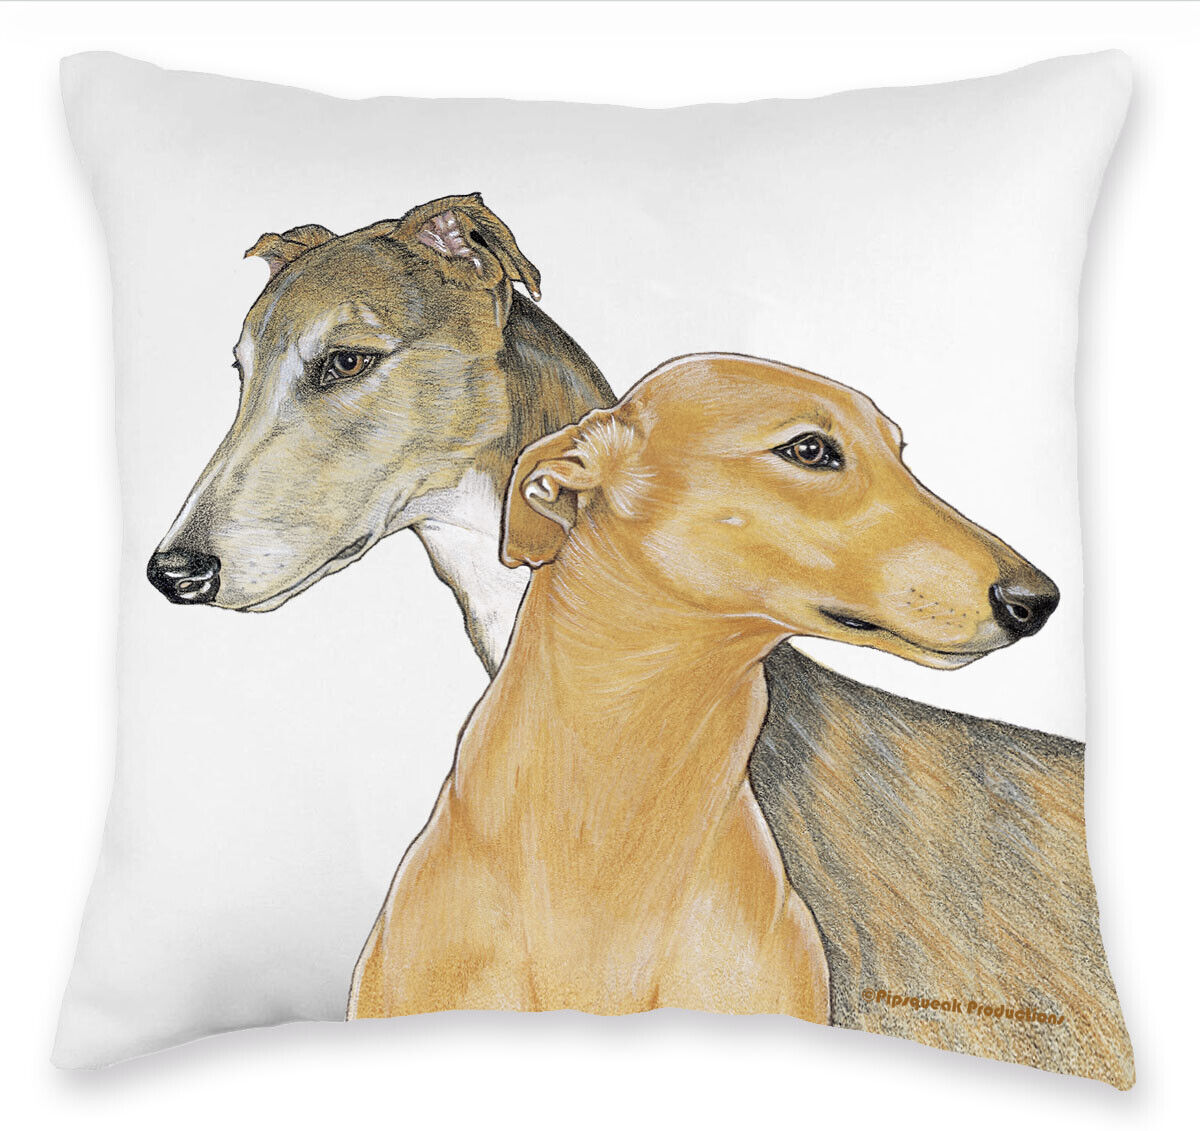 Greyhound Portrait, Decorative Throw Pillow, Cute Dog Accent Cushion, Home Decor